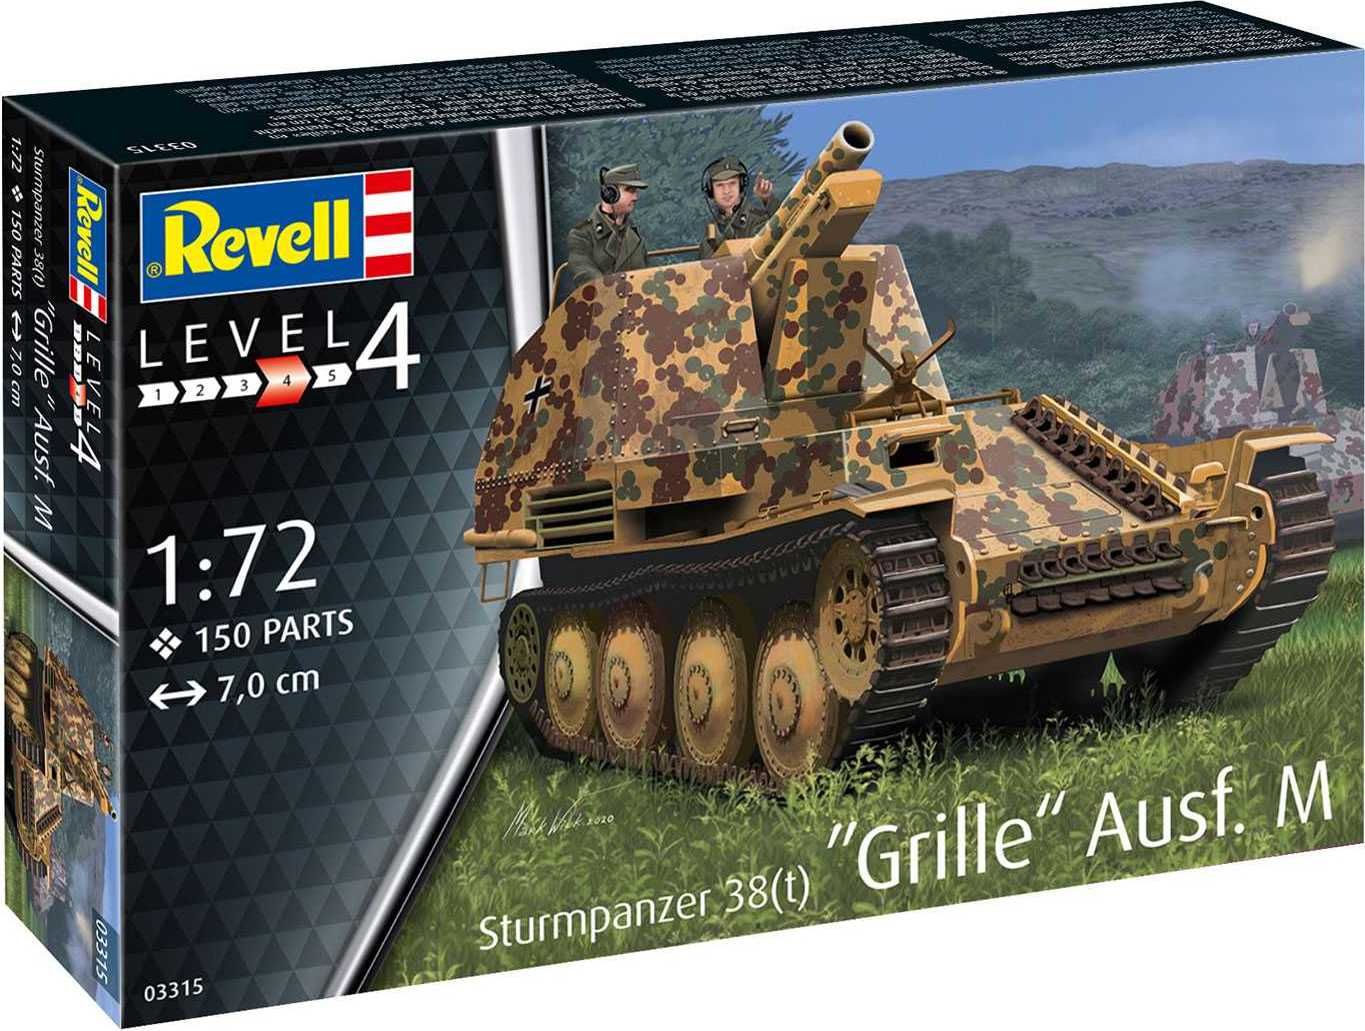 REVELL Plastic ModelKit military 03315 - Sturmpanzer 38(t) Grille Ausf. M (1:72) - obrázek 1